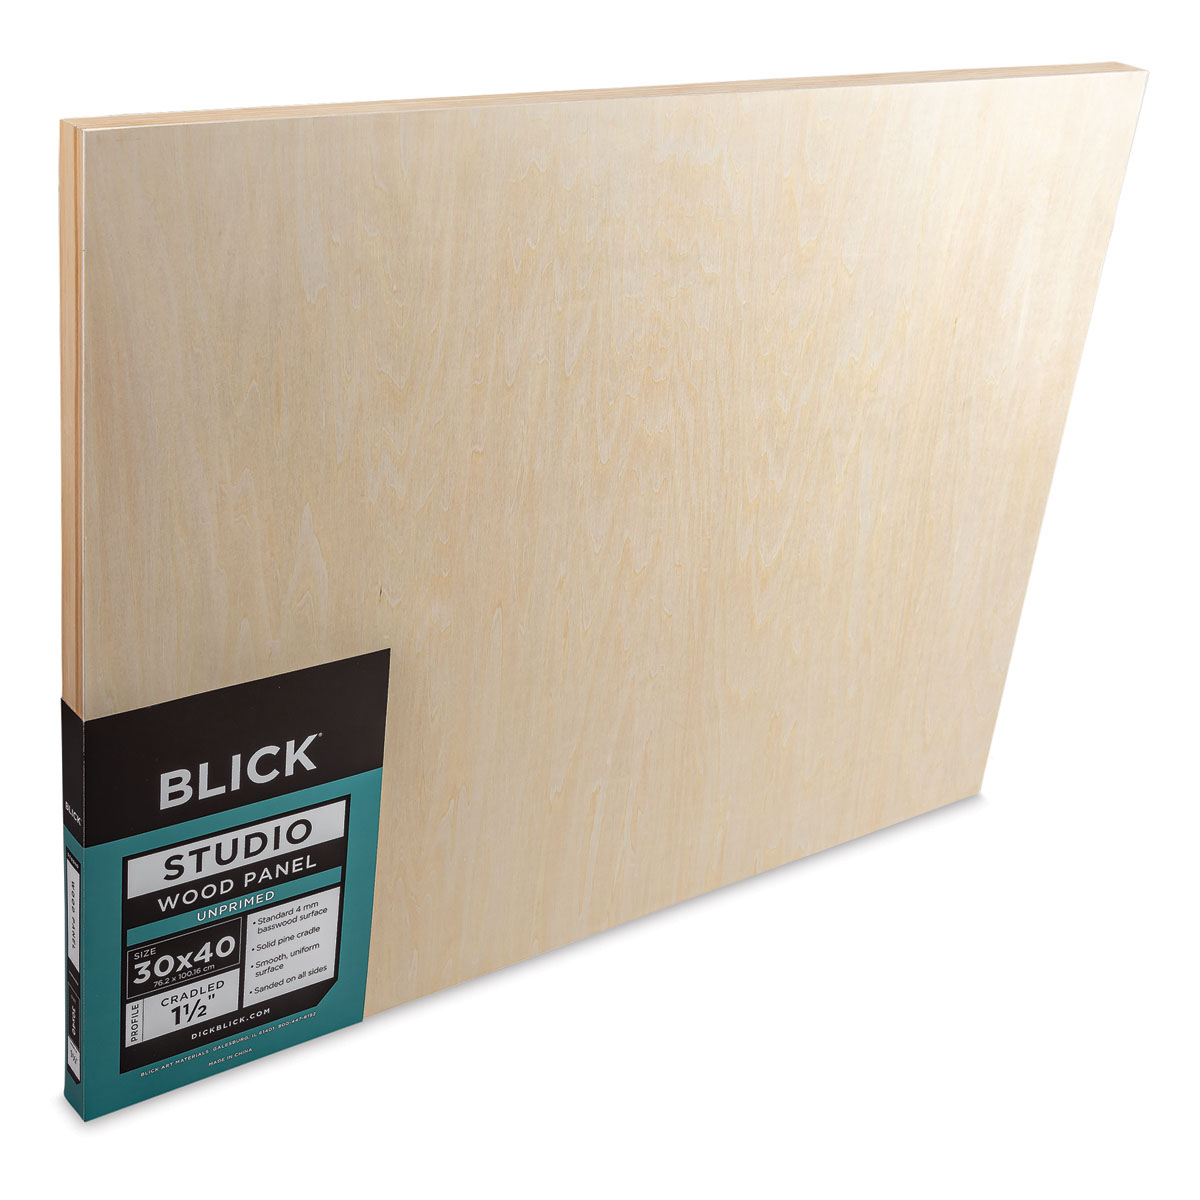 Blick Wood Gallery Frame - Black, 30 x 40